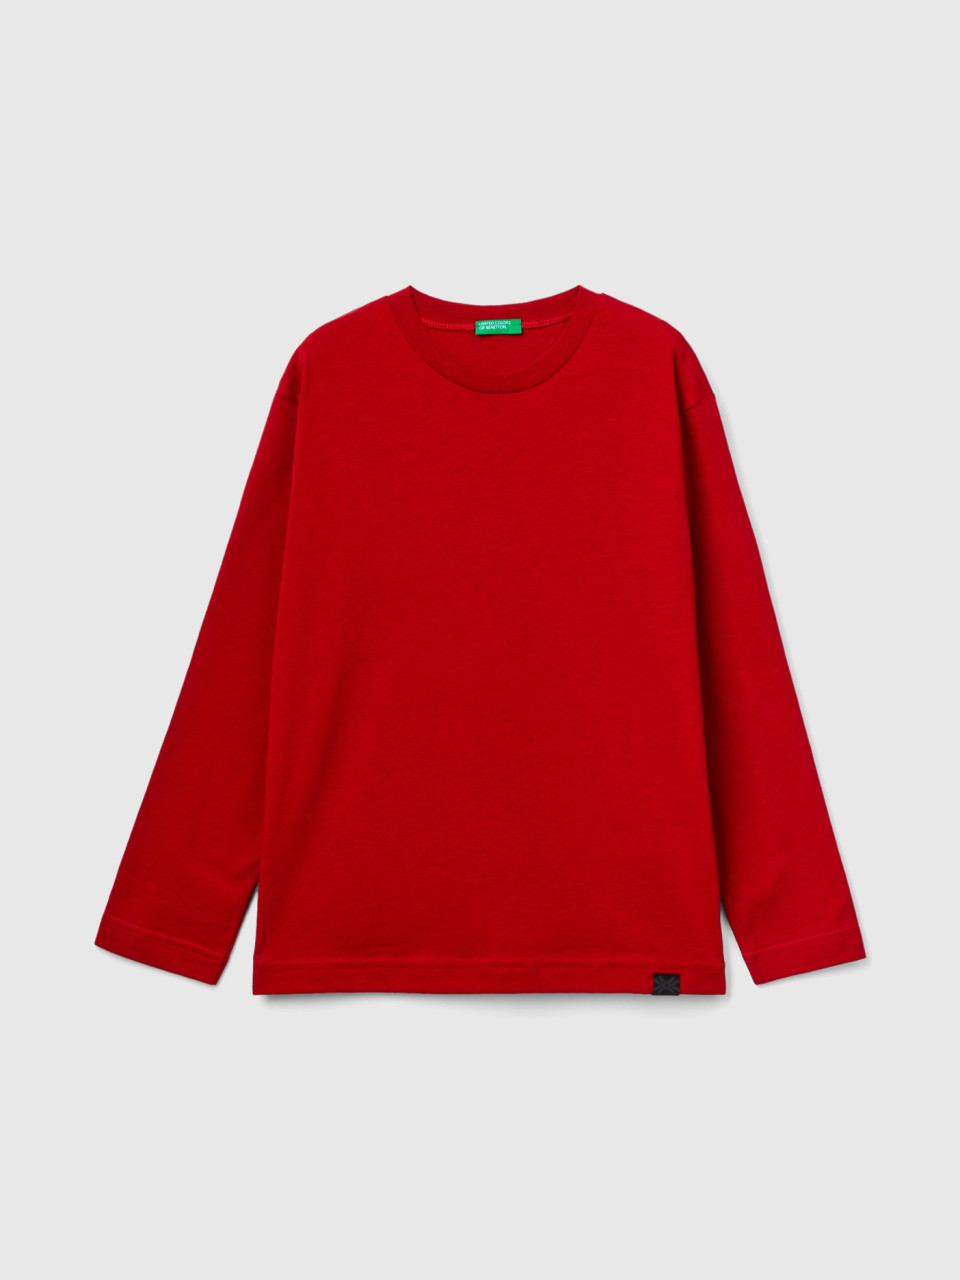 Benetton, 100% Organic Cotton Crew Neck T-shirt, Red, Kids